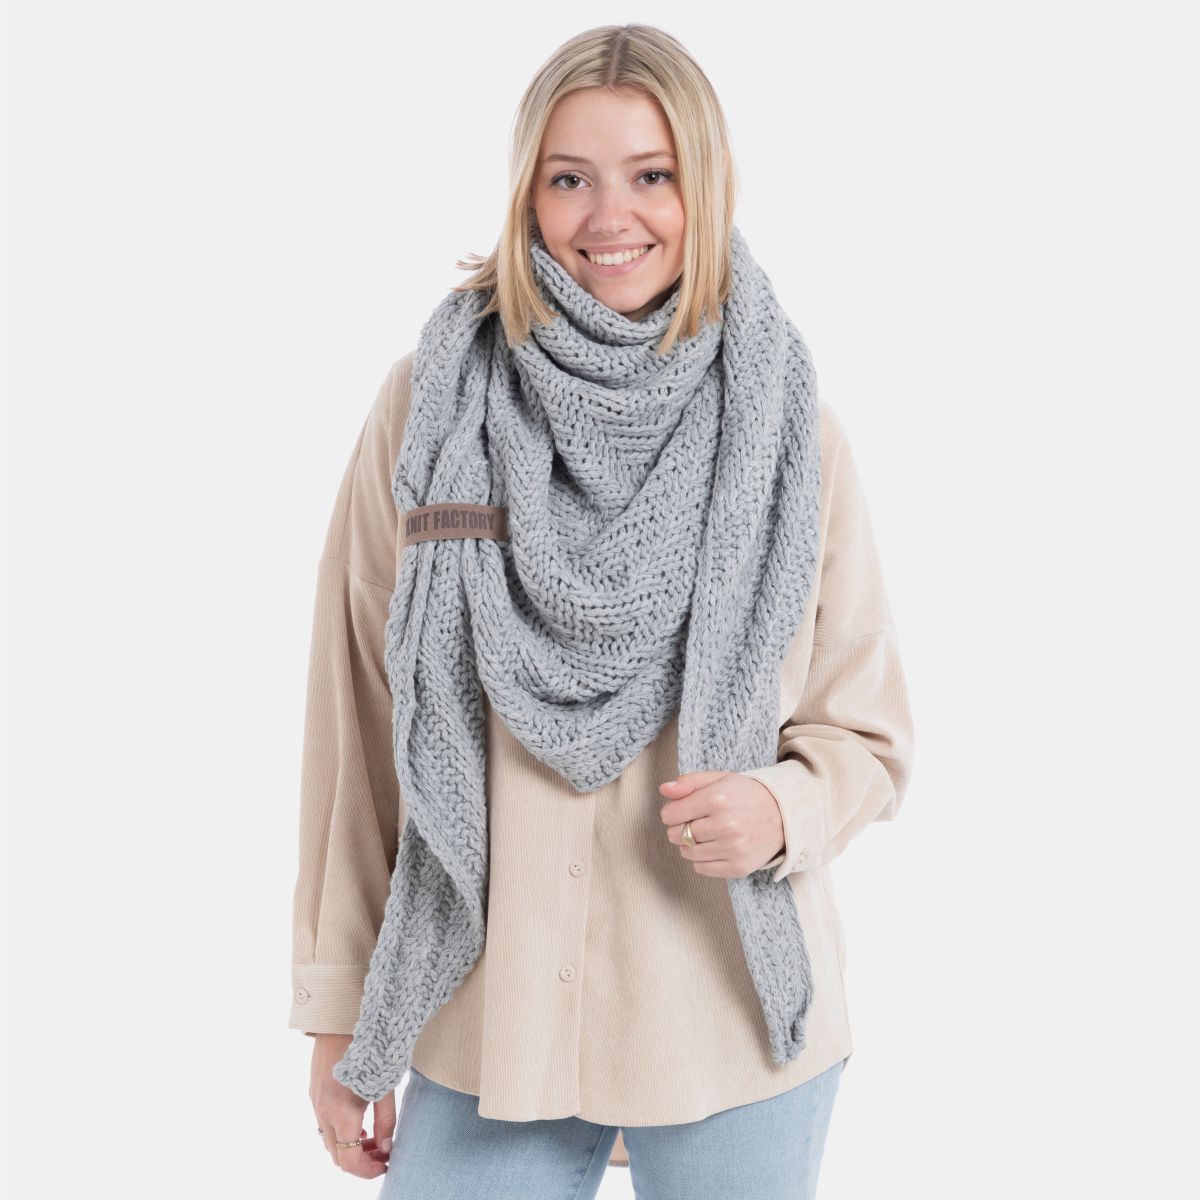 sally triangle scarf light grey